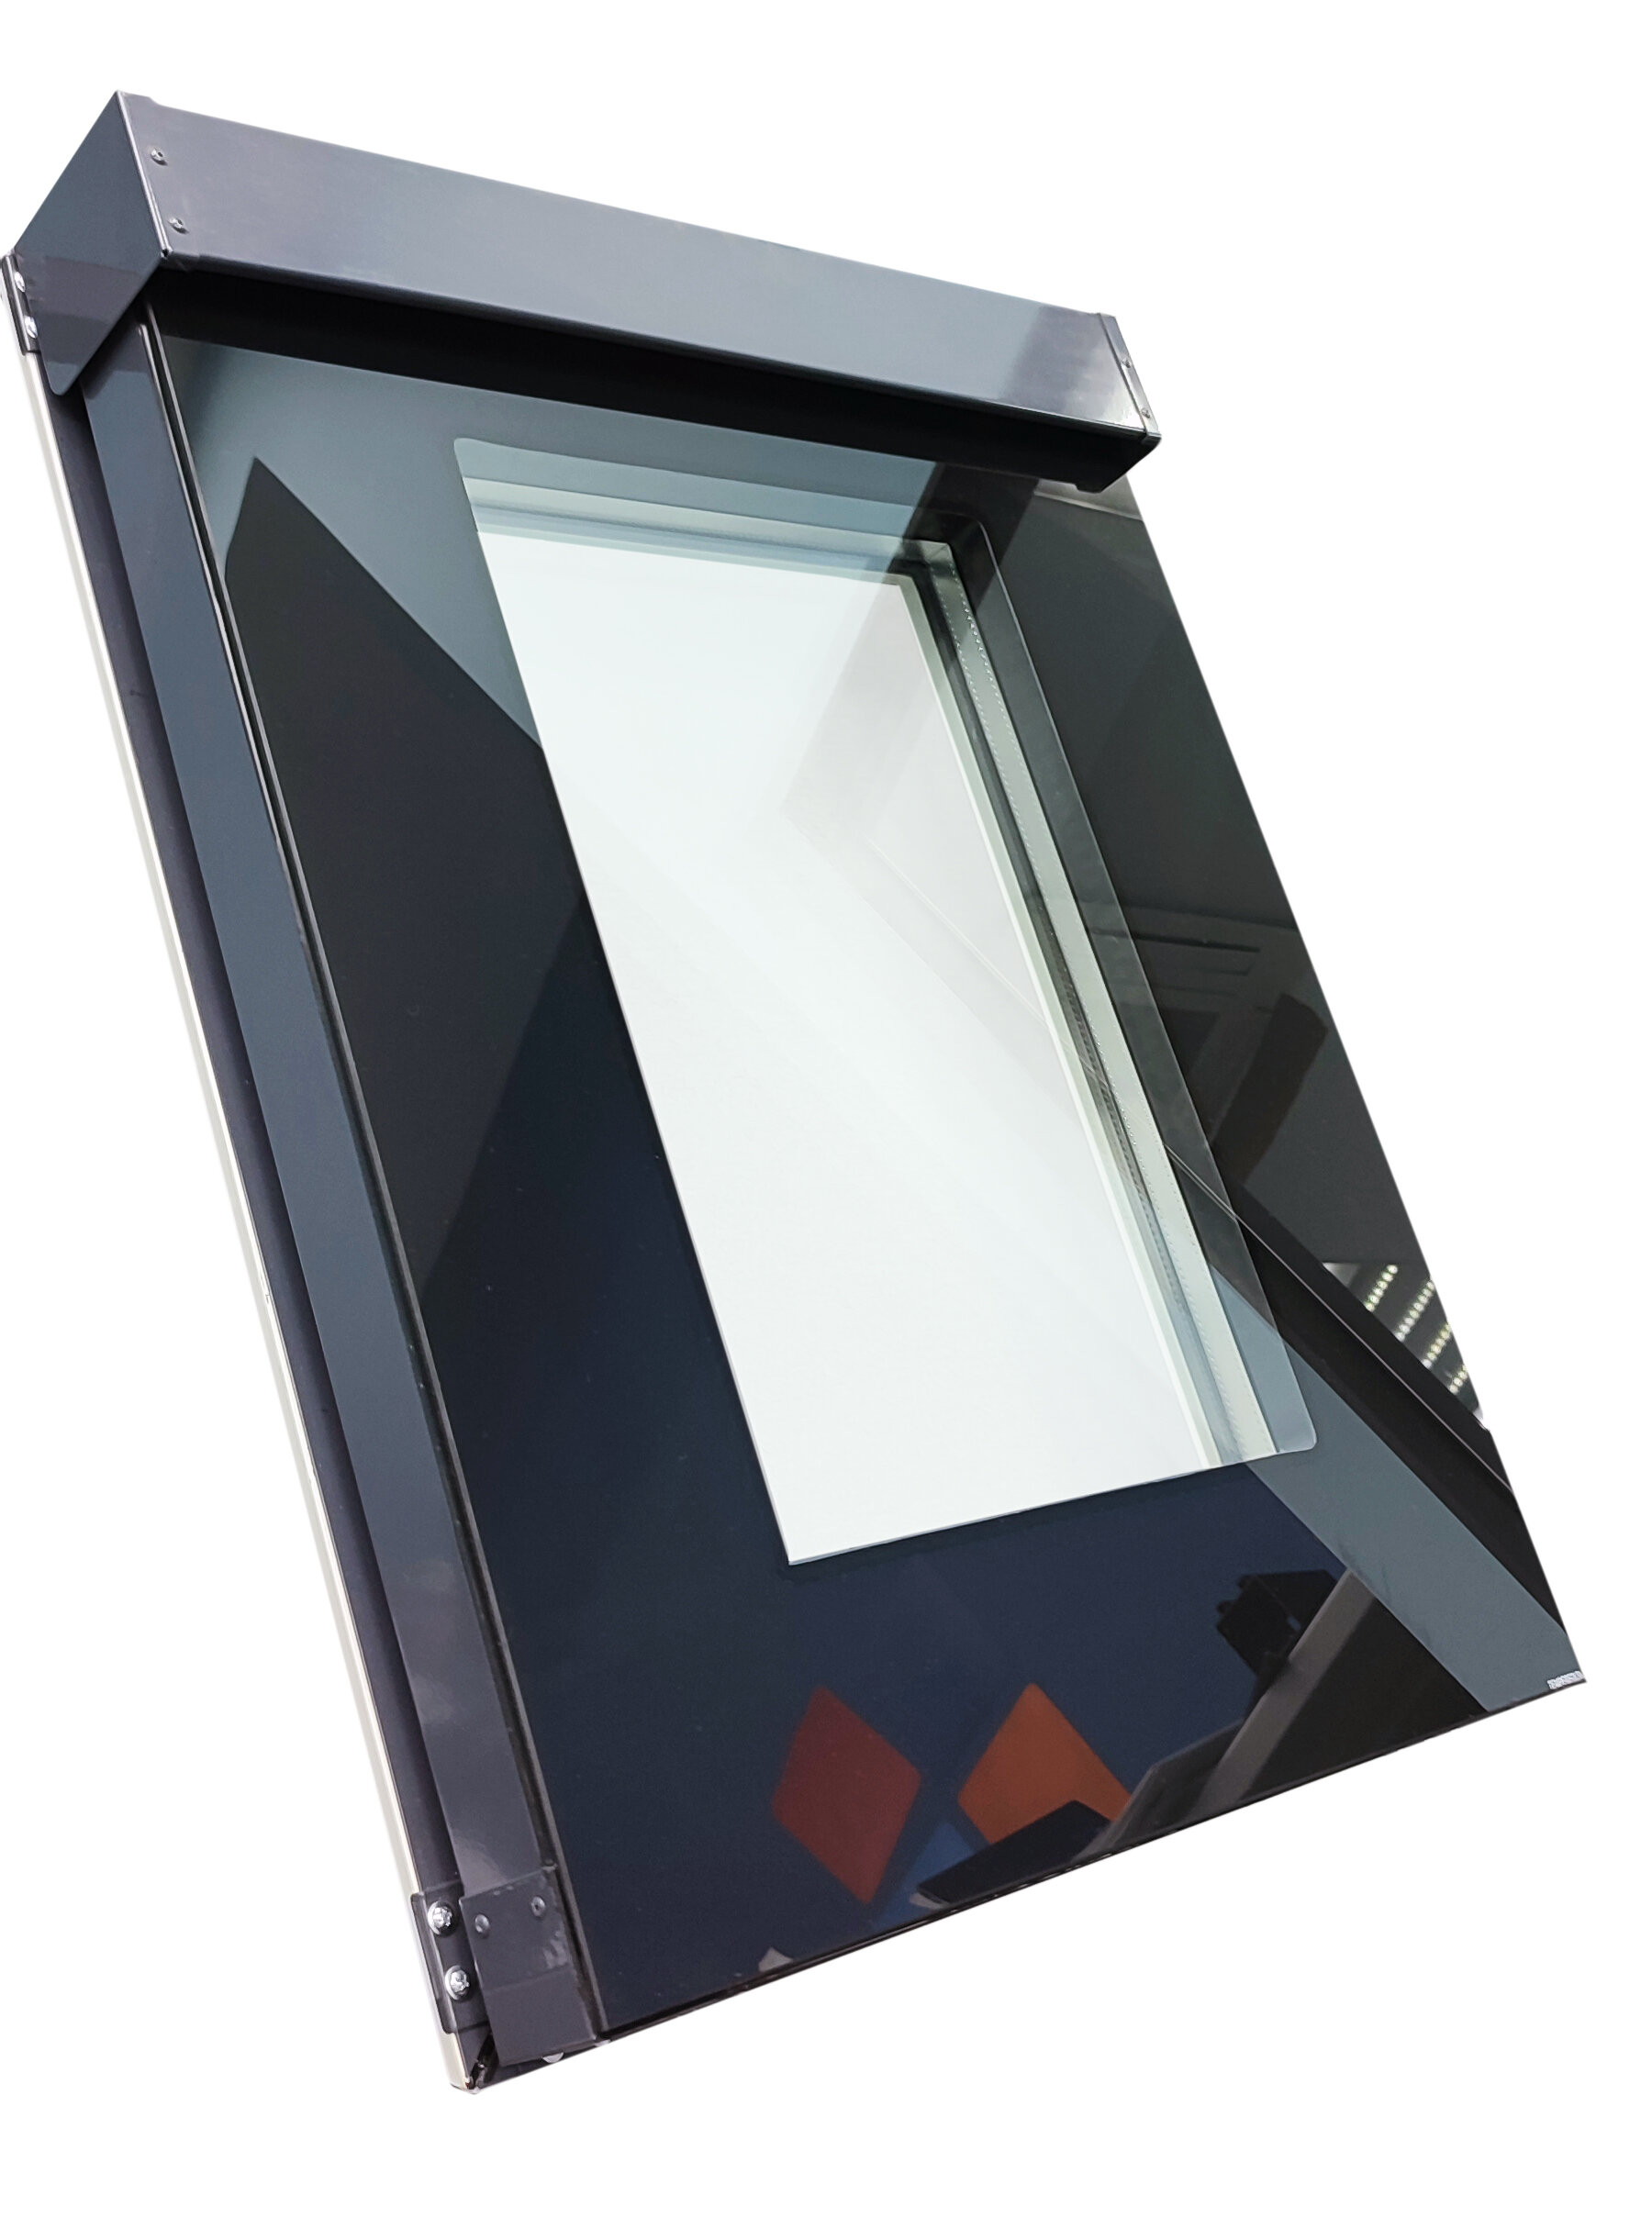 Мансардное окно ПВХ REHAU STARLIGHT 850х640 мм (ВхШ) одностворчатое открывающееся подвесное